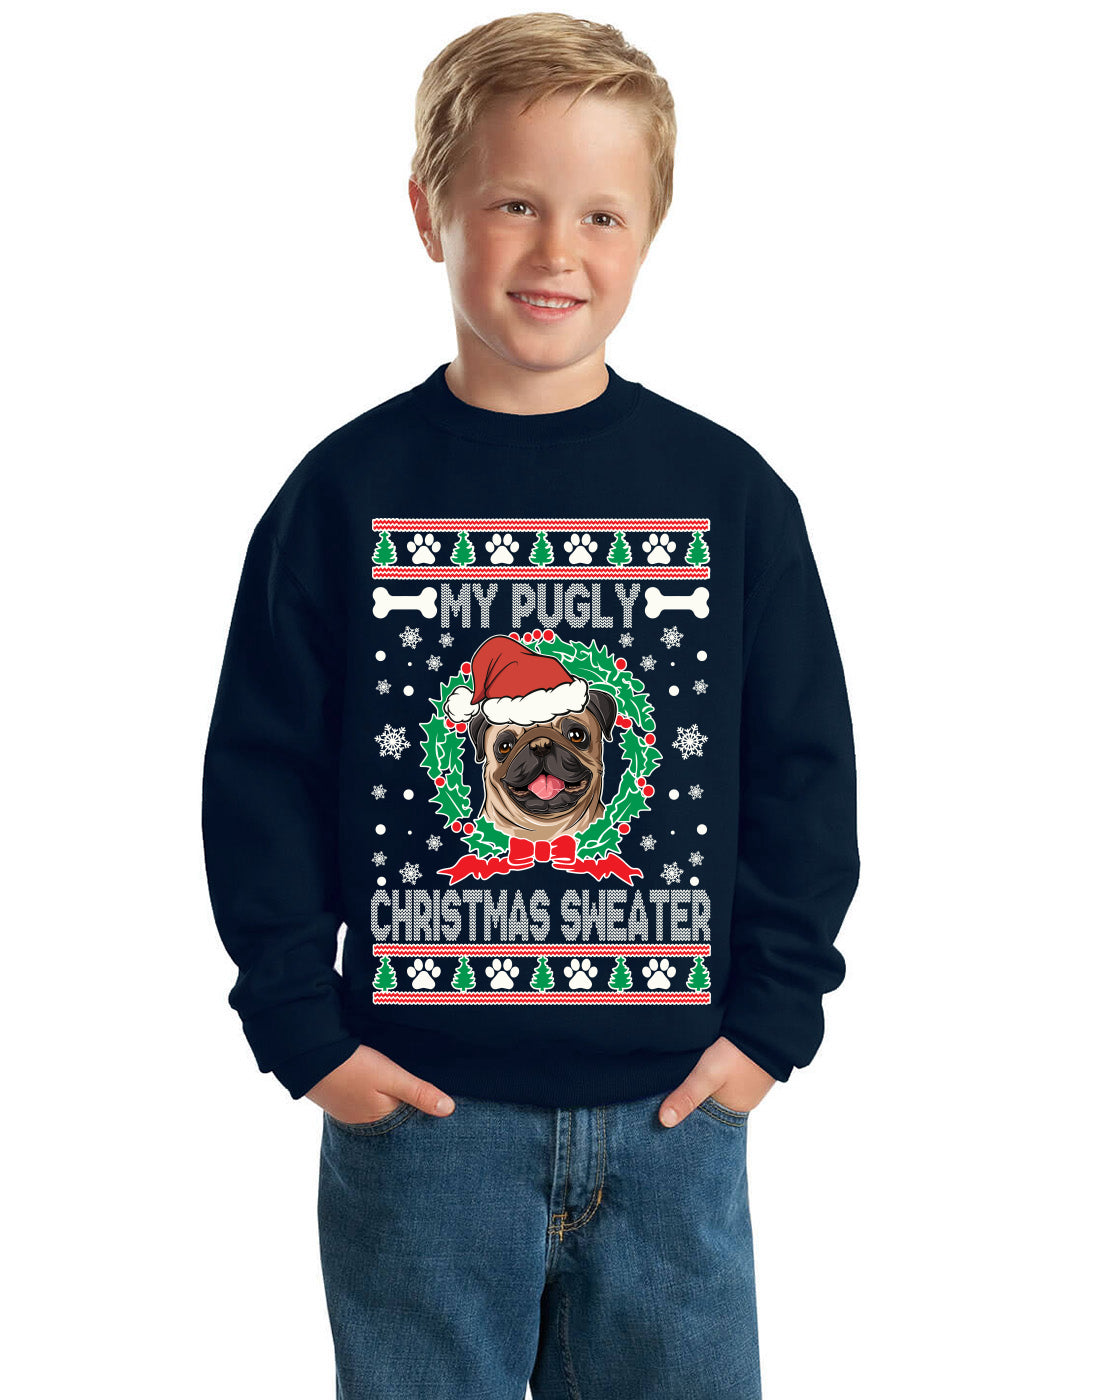 My Pugly Christmas Sweater Ugly Christmas Sweater Unisex Boys Girls Crewneck Graphic Sweatshirt